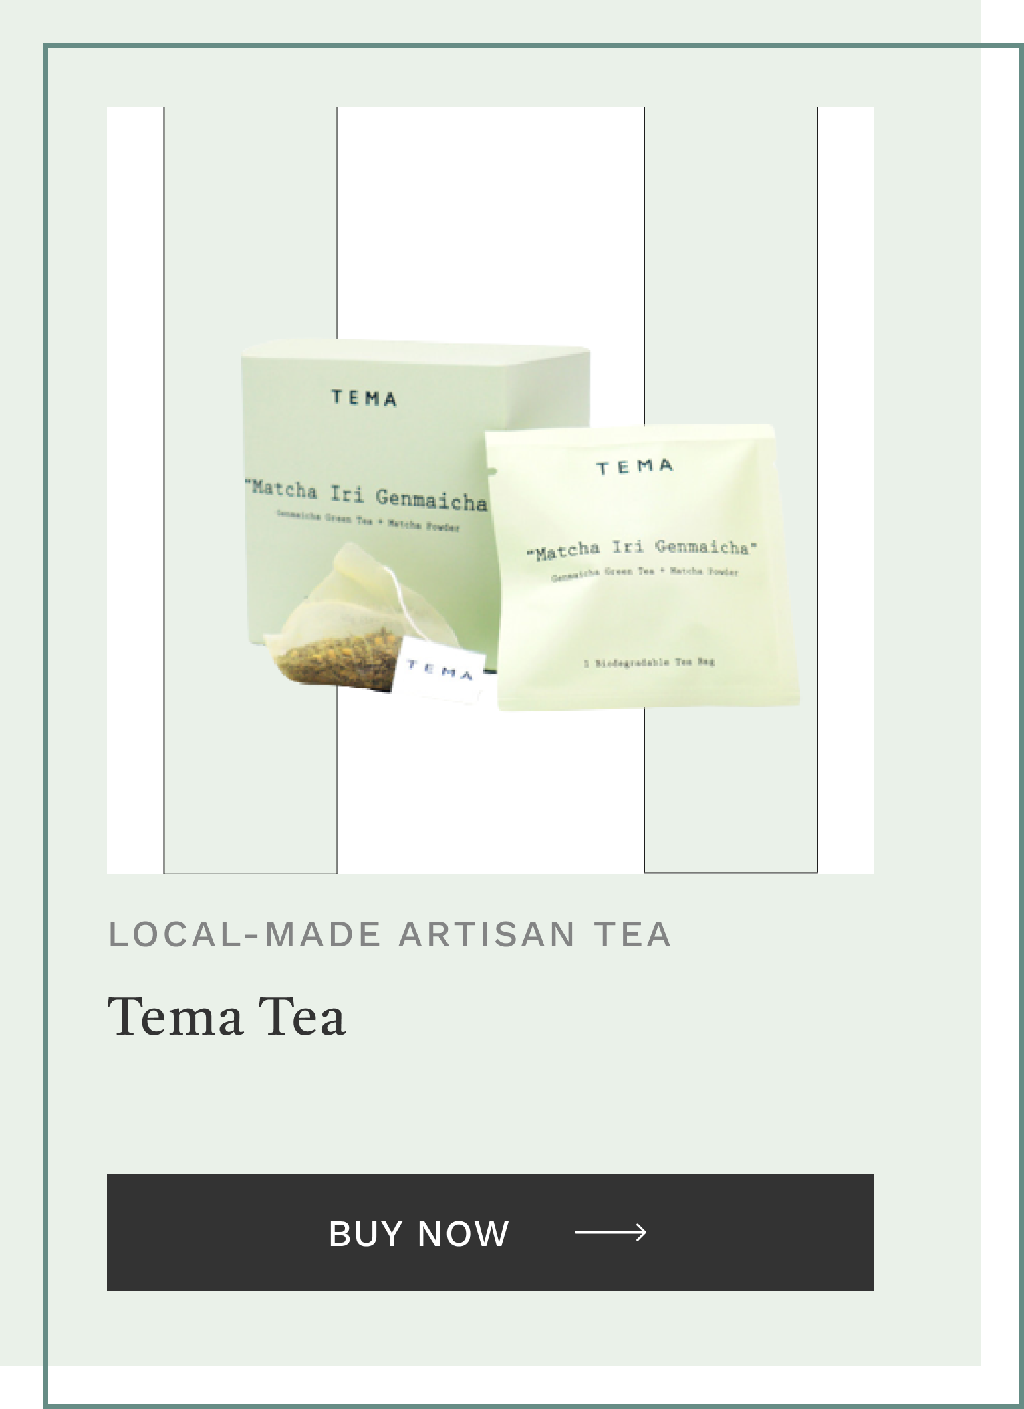 Where To Shop: Local-made Artisan Tea